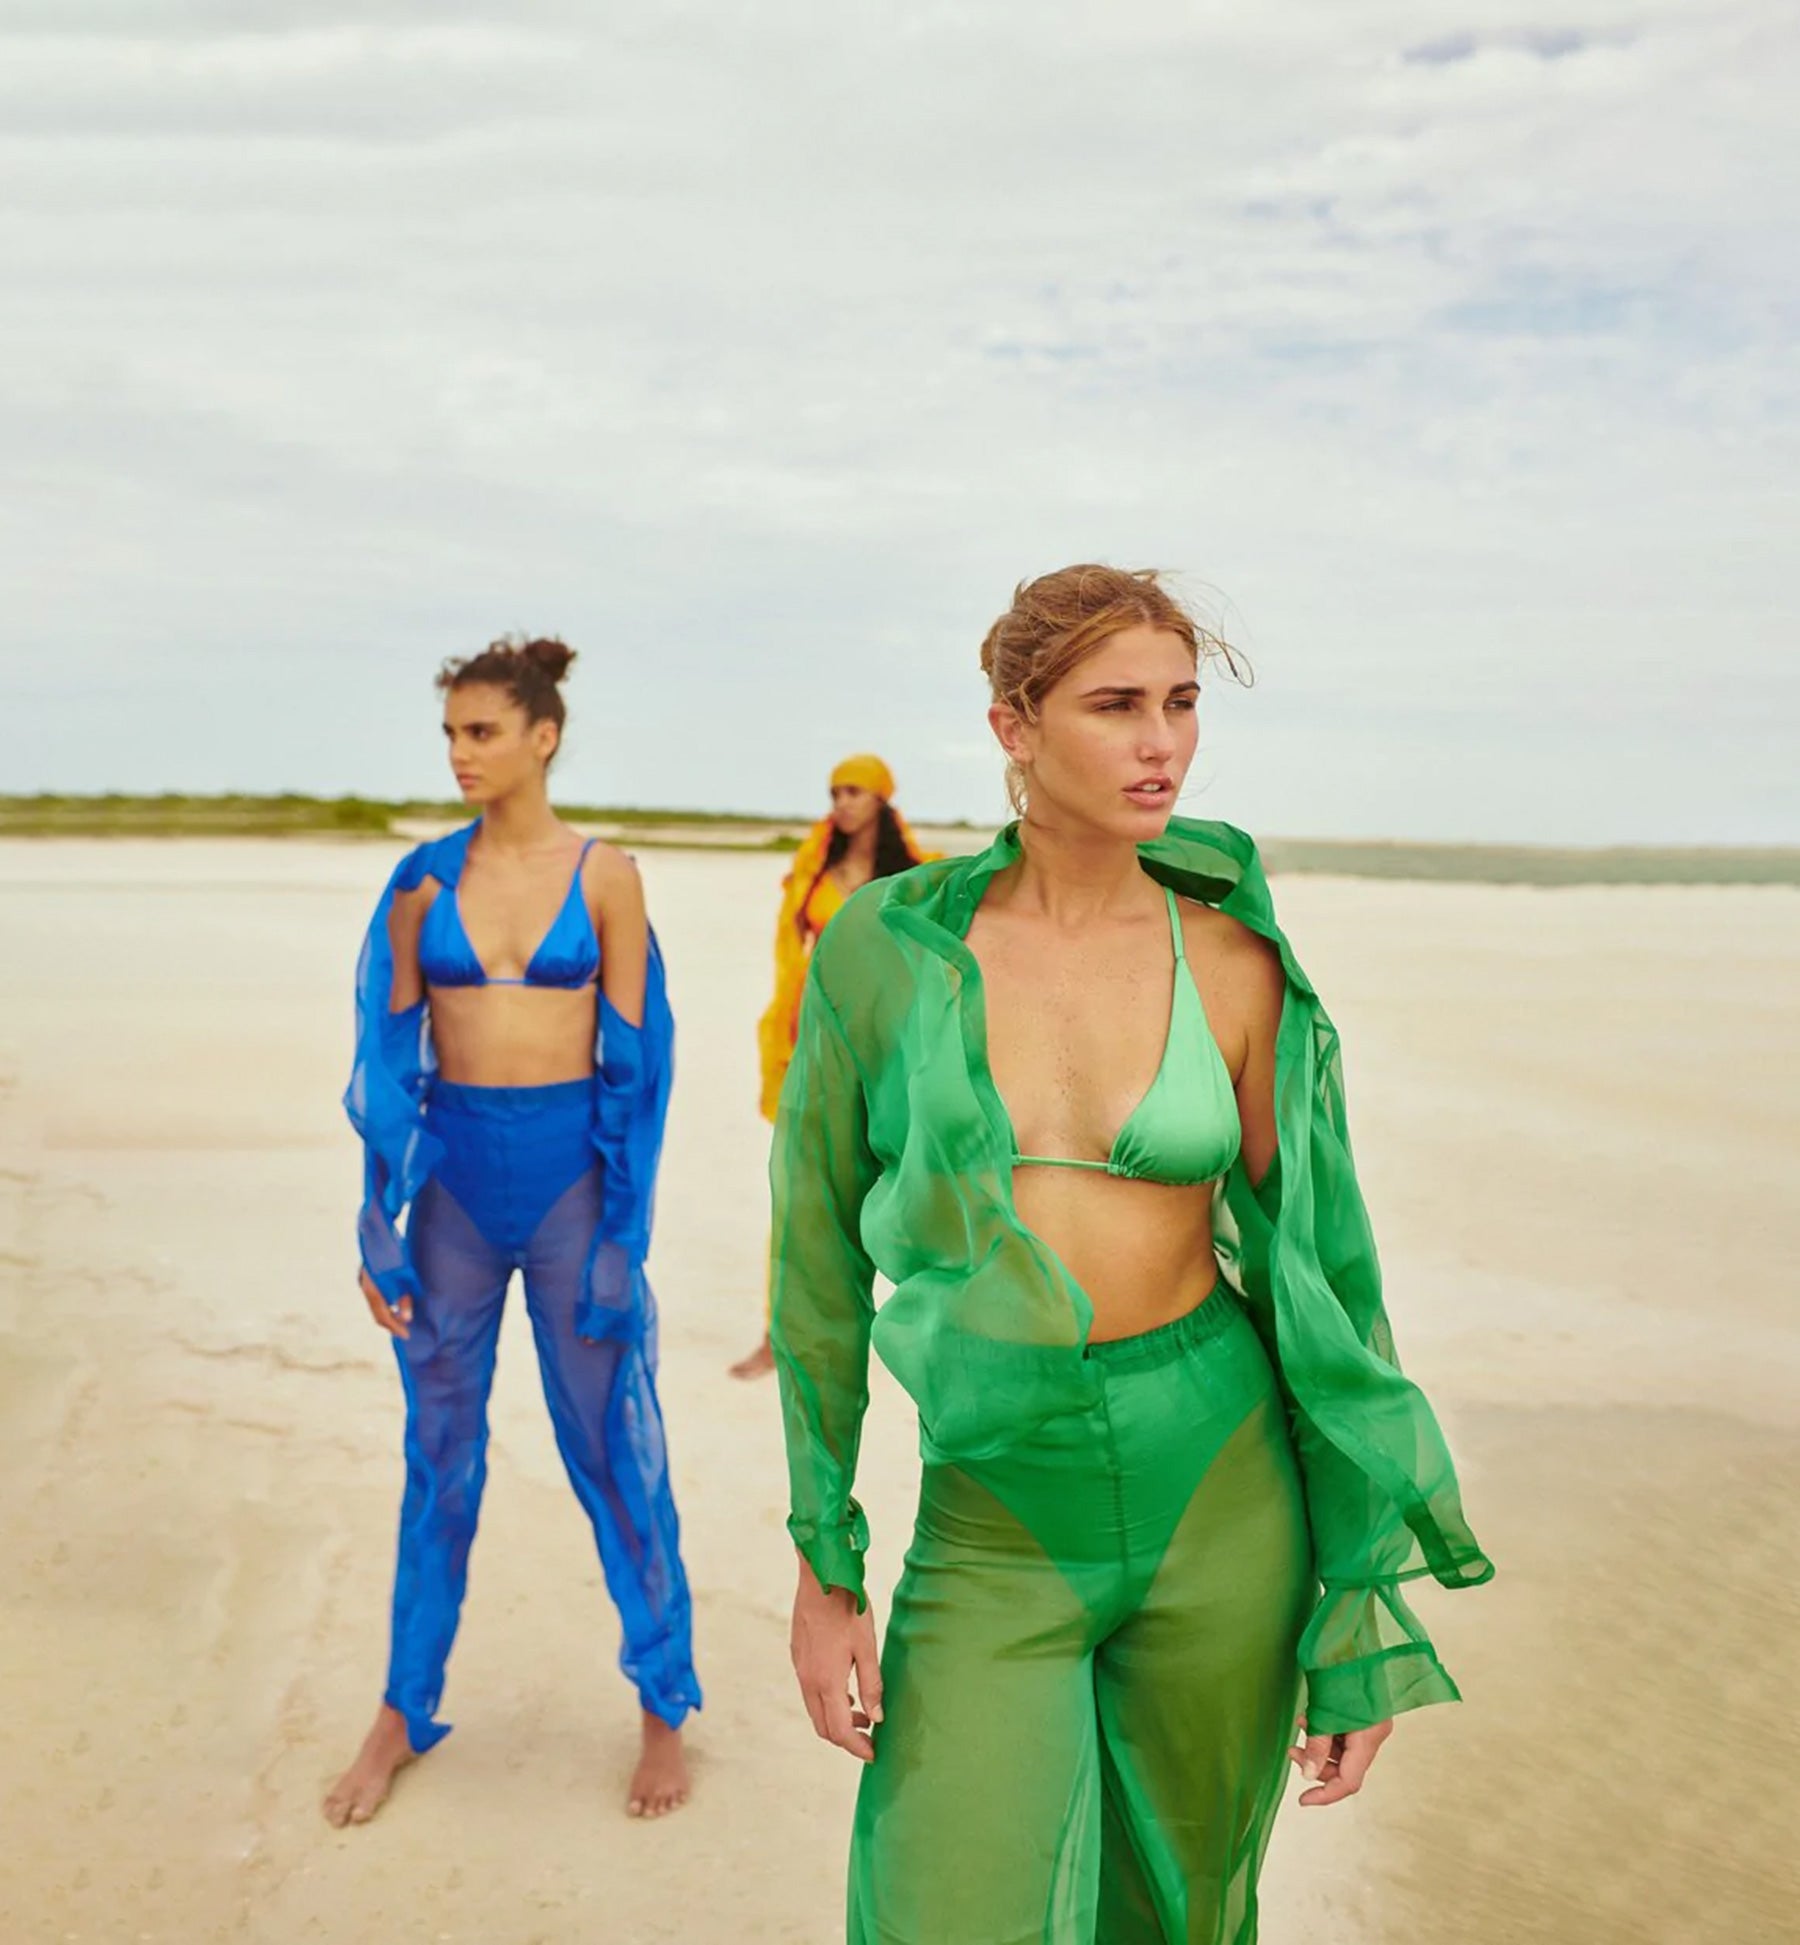 Gaia Bikini Set Green